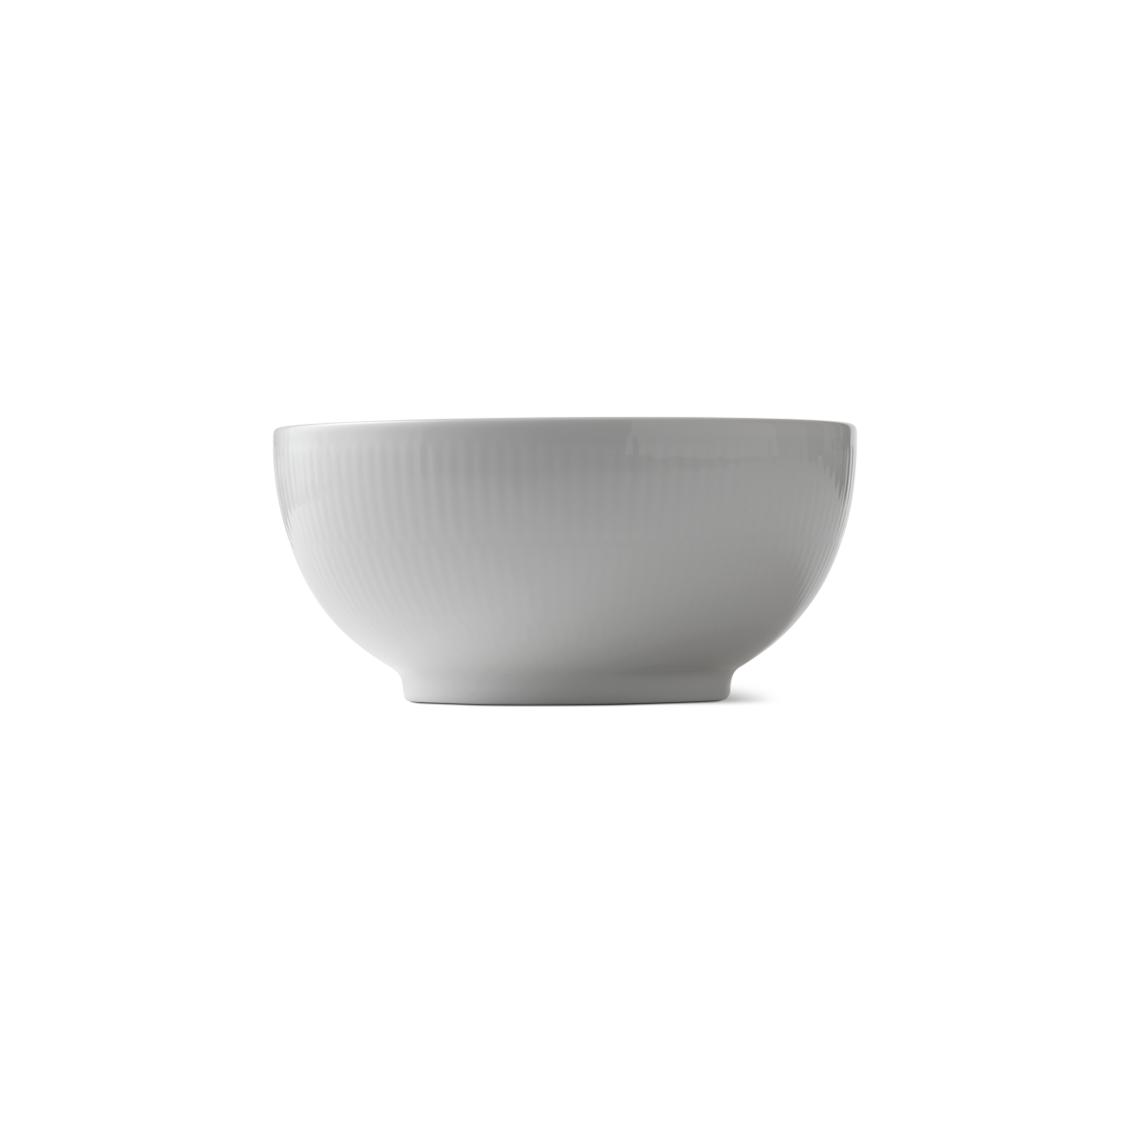 Royal Copenhagen White Foted Bowl, 110Cl